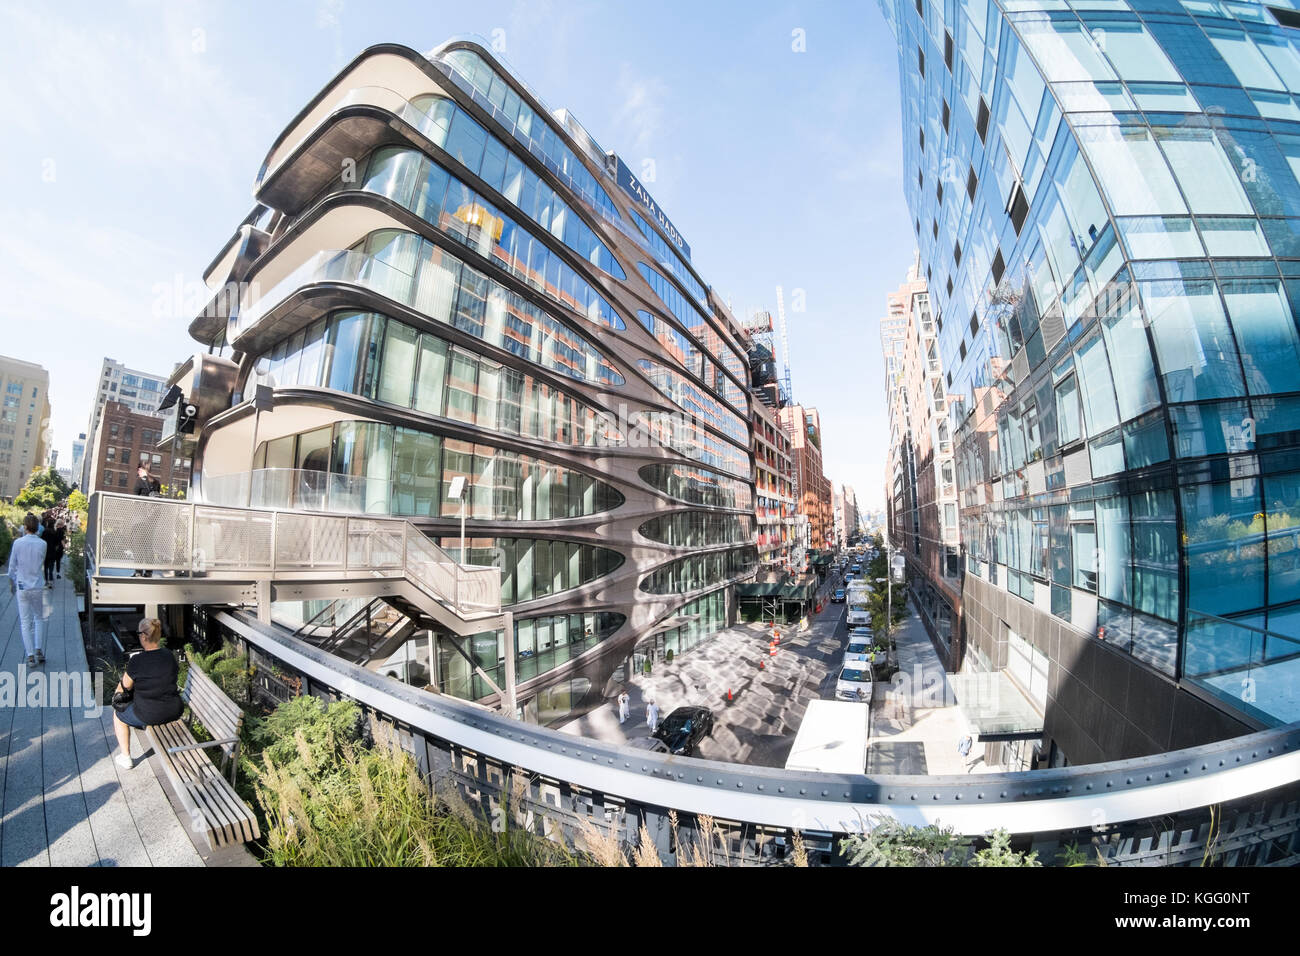 Zaha Hadid Designed Condo Apartments The High Line Chelsea New York